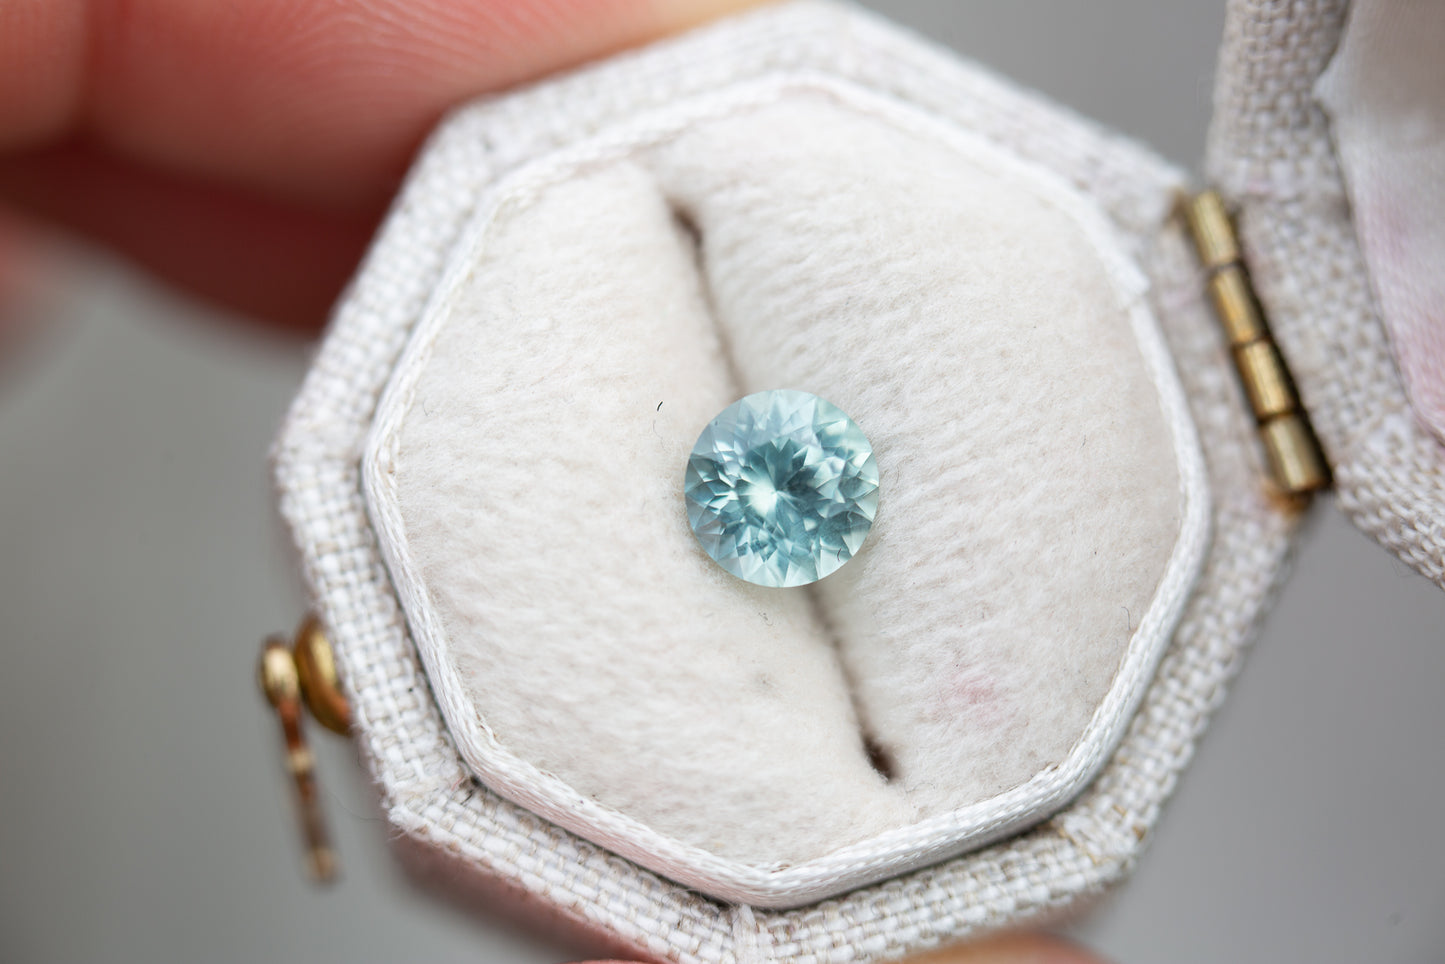 1.02ct round light teal blue sapphire